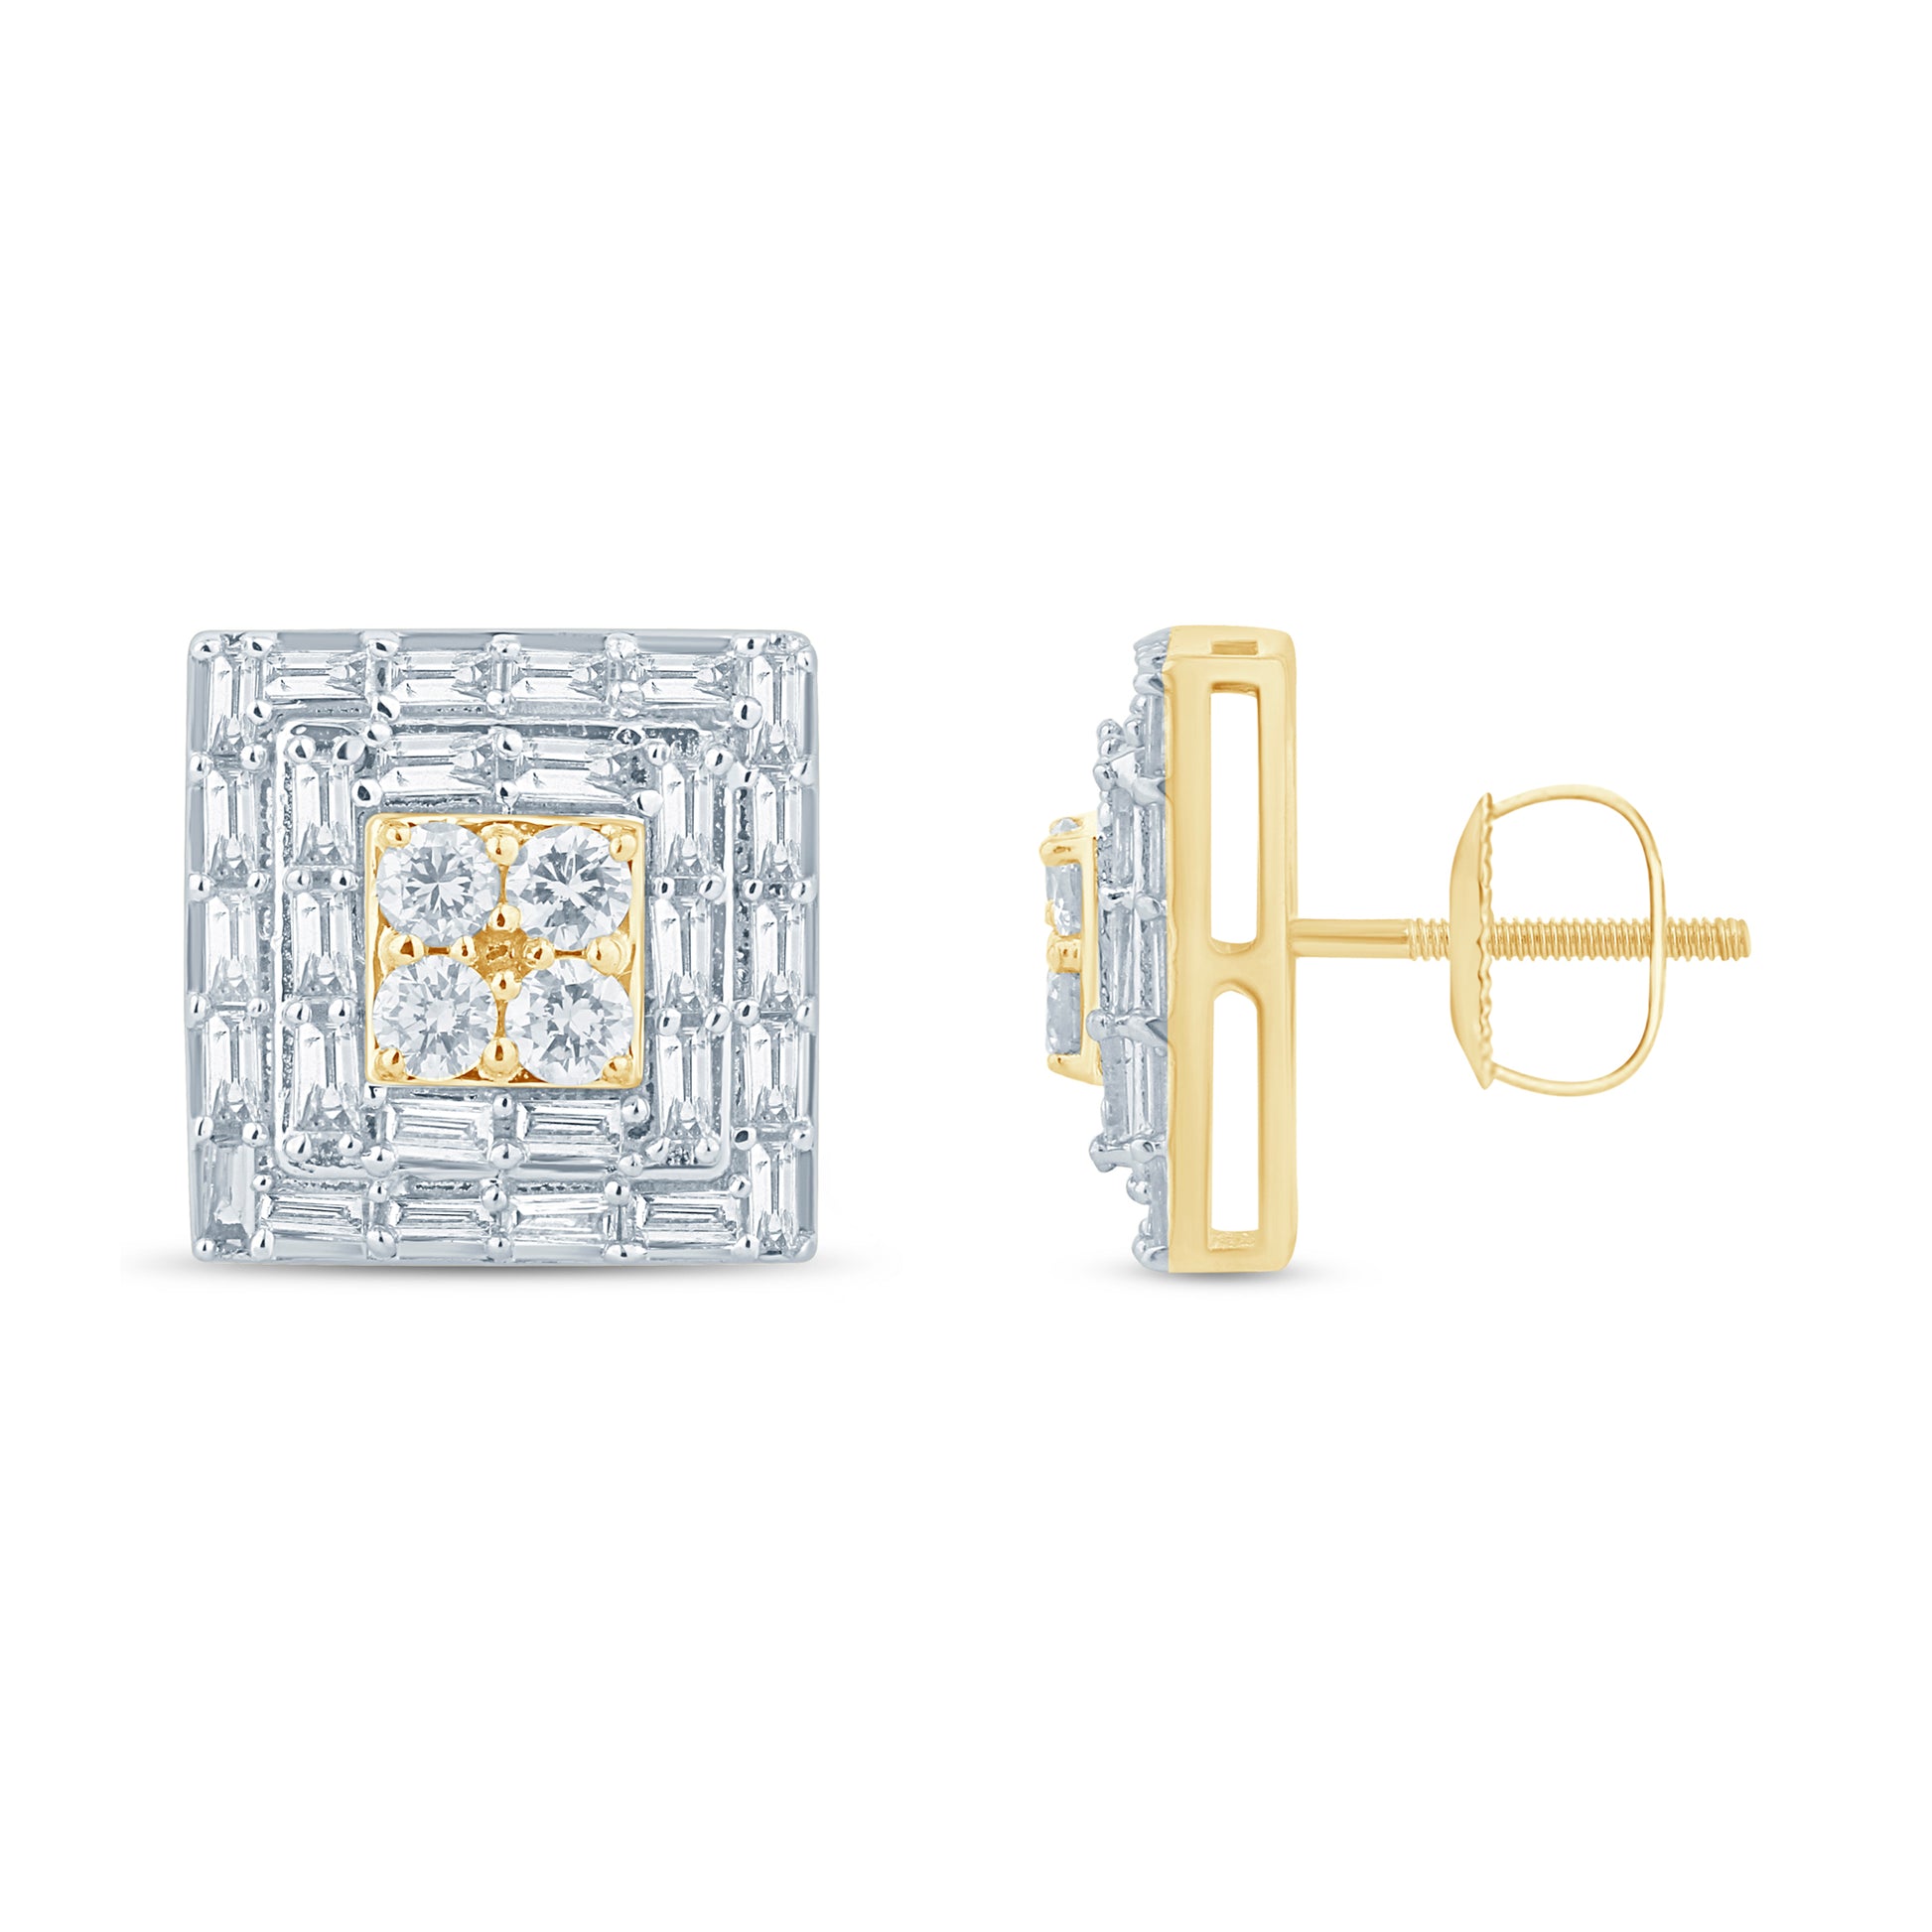 10 Karat Yellow Gold 1.50 Carat Diamond Square Earrings-0129970-YG